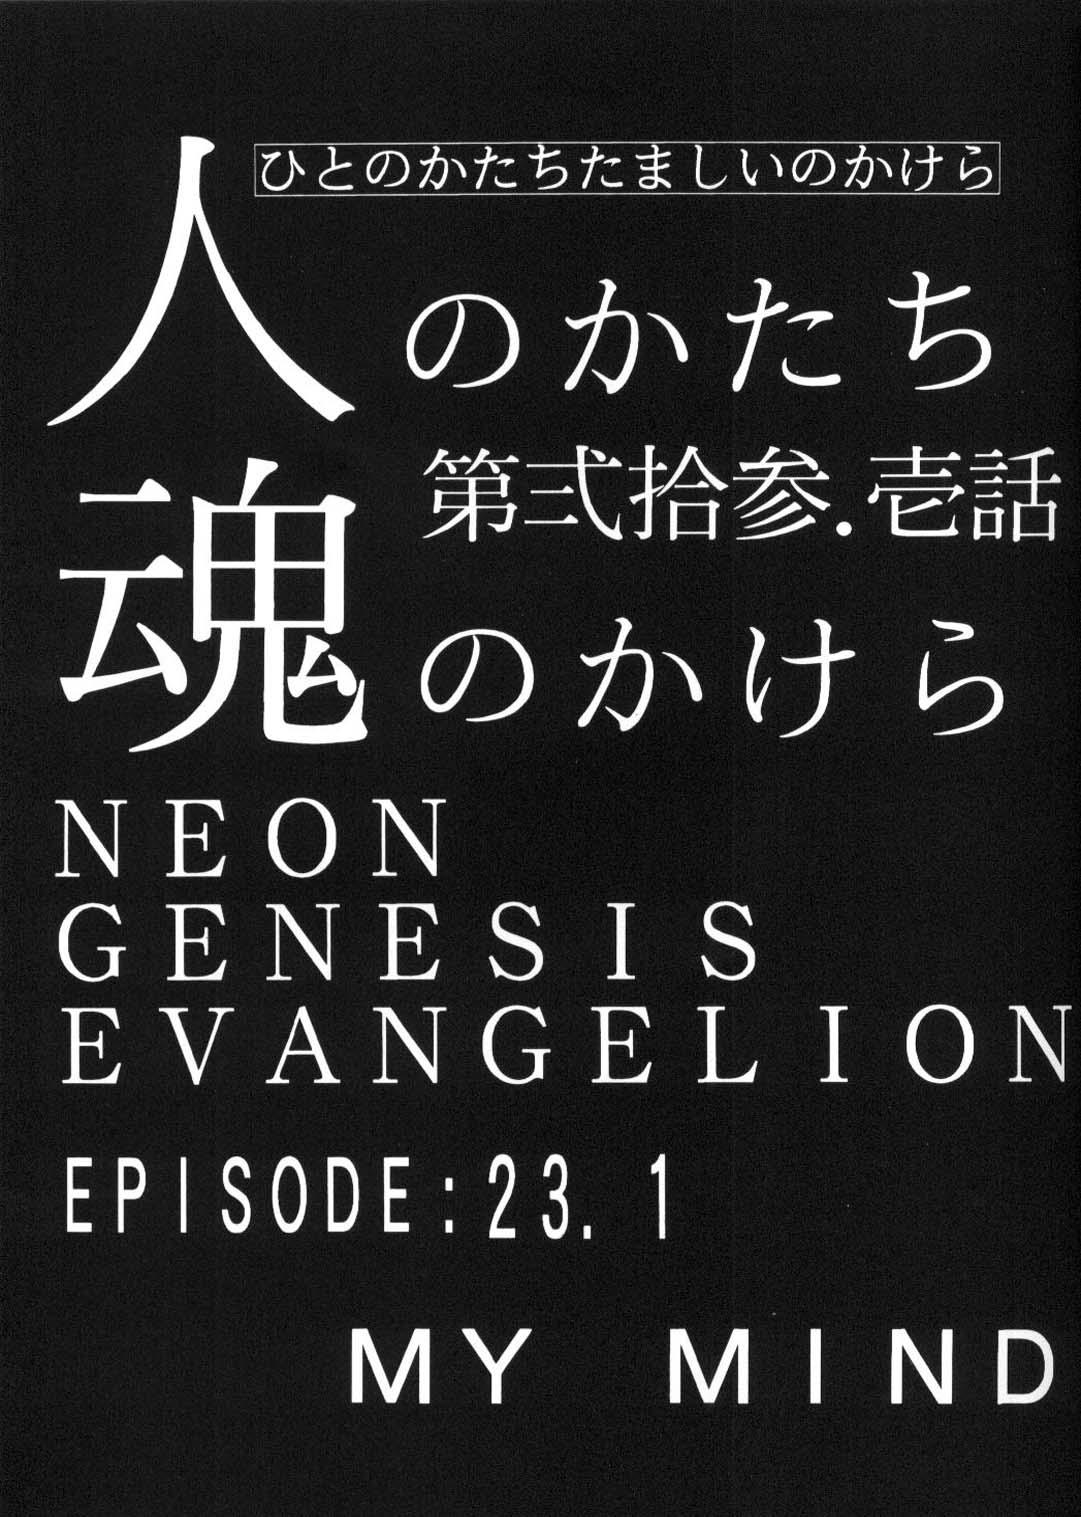 Stepsister Expedia Ver 1.0A - Neon genesis evangelion Shesafreak - Page 4